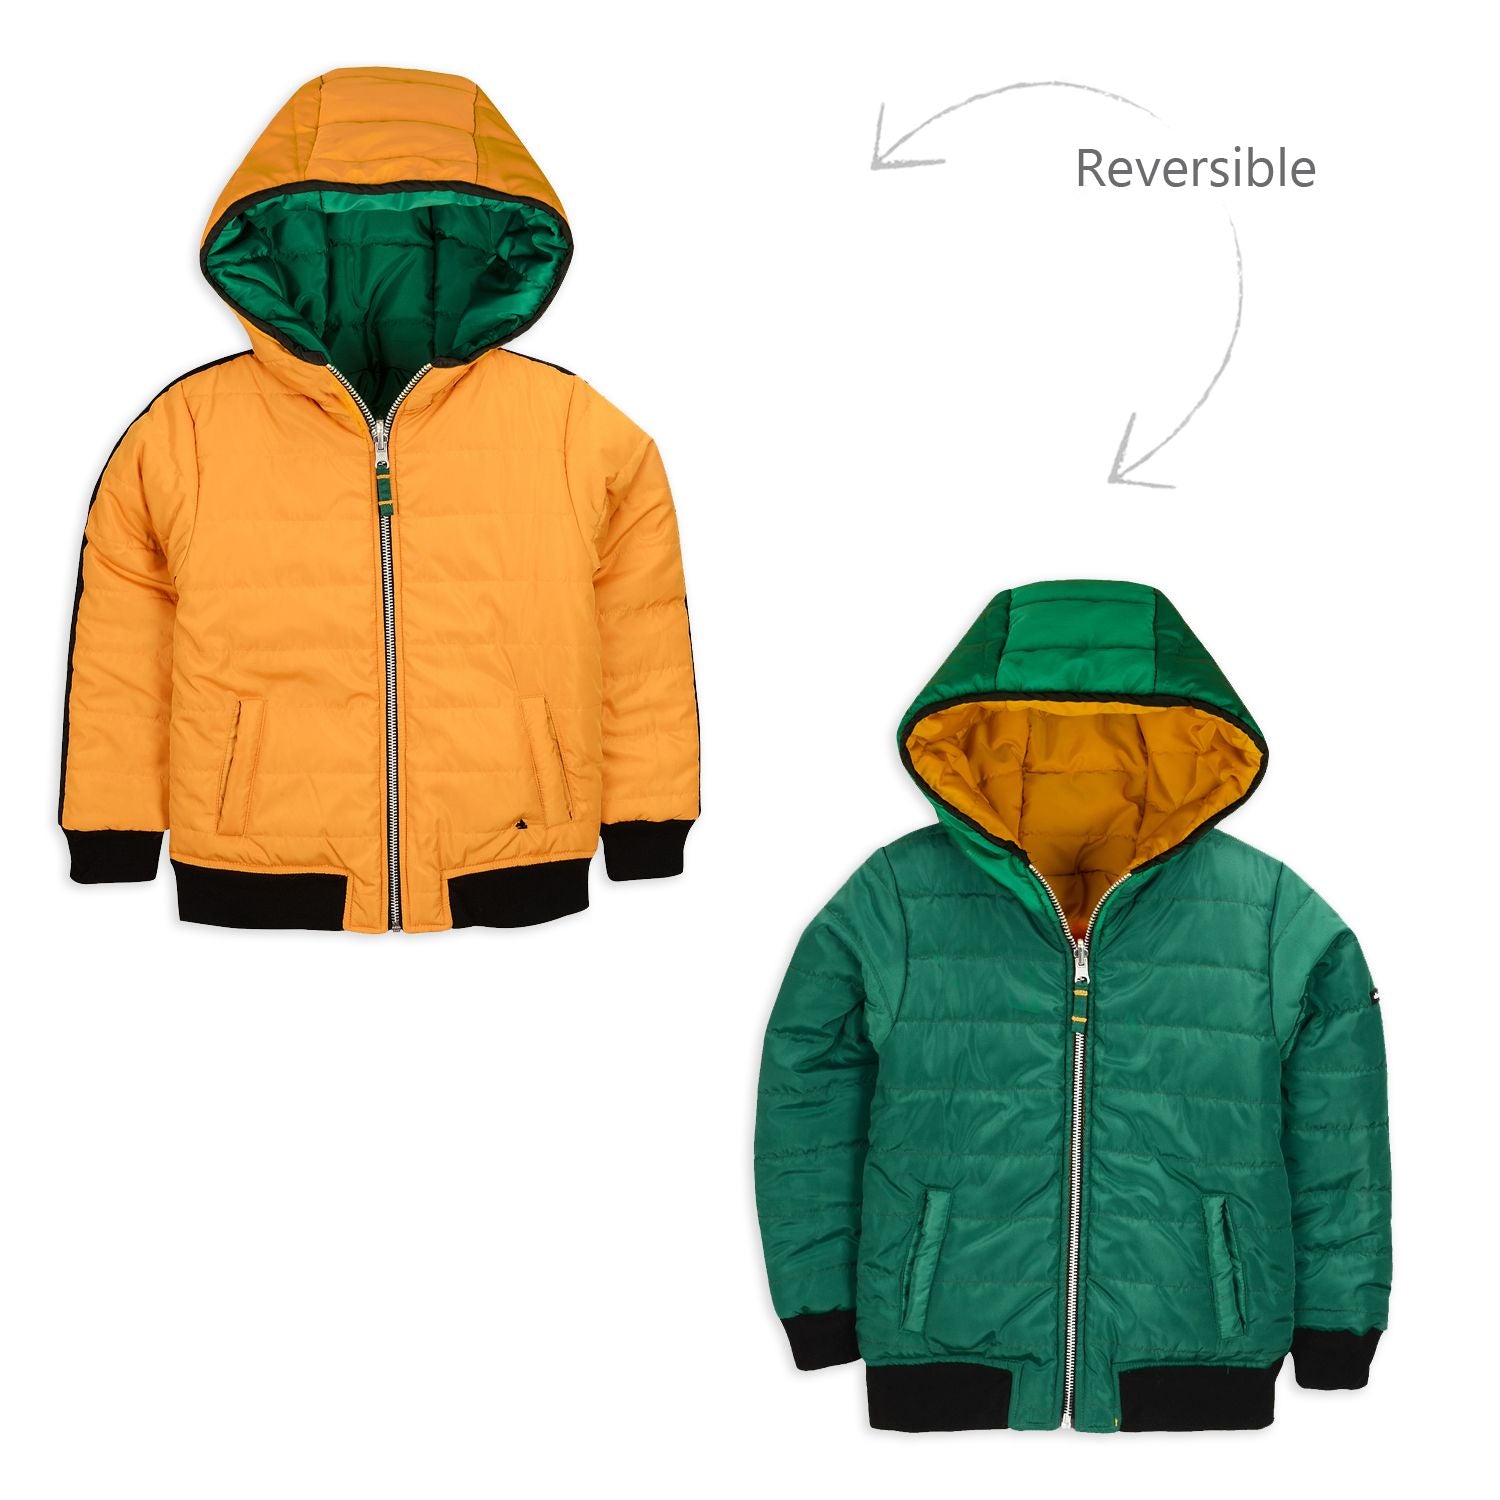 sunny Reversible jacket for kids